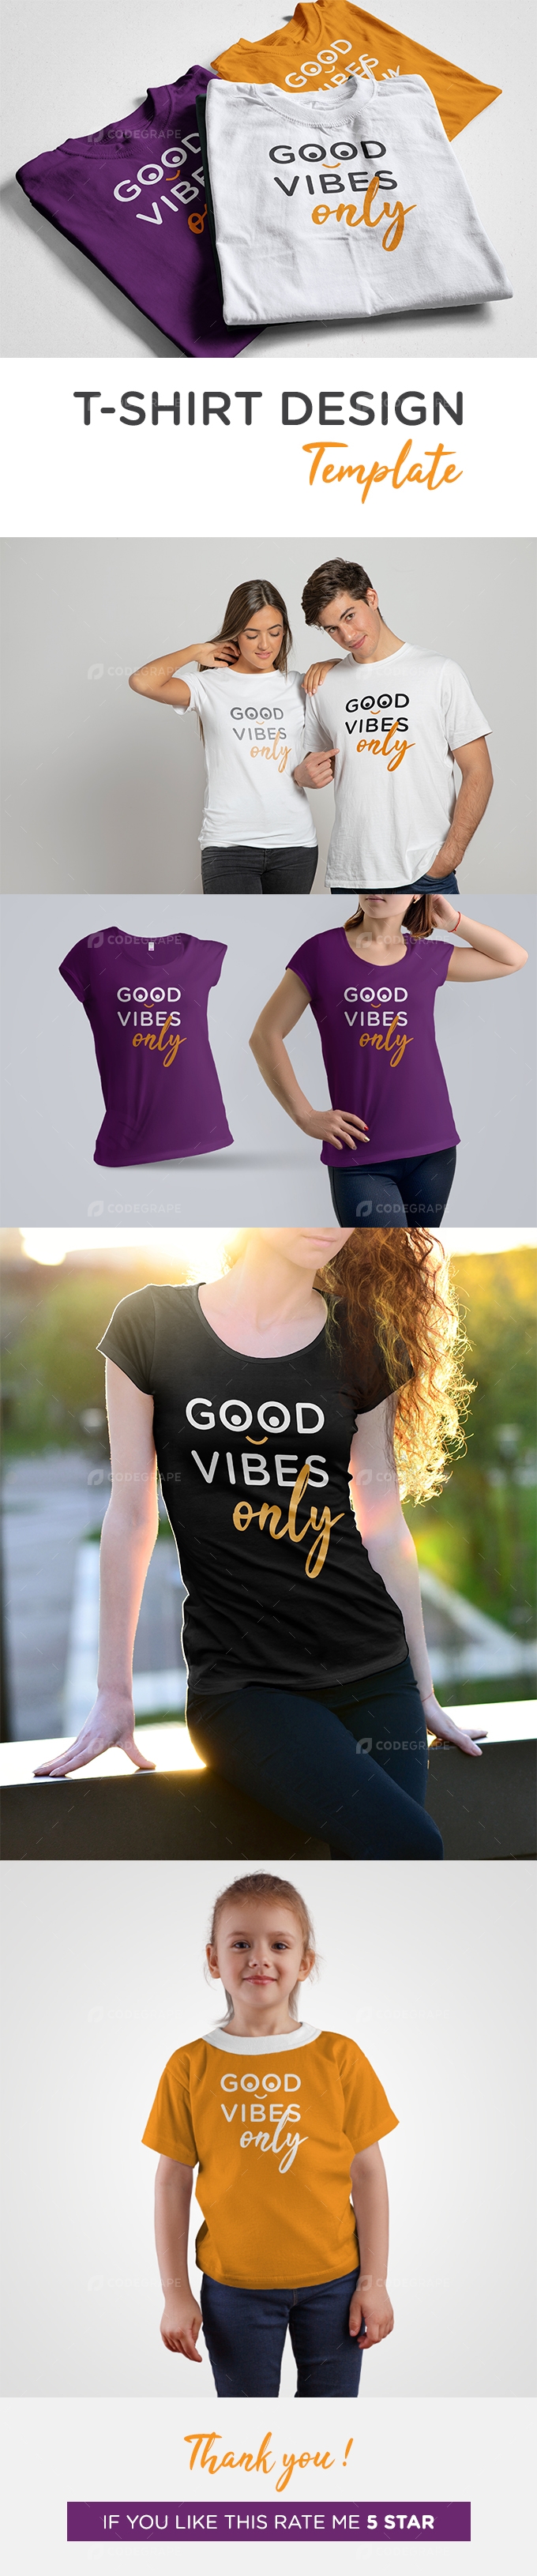 GOOD VIBES only T-shirt Design